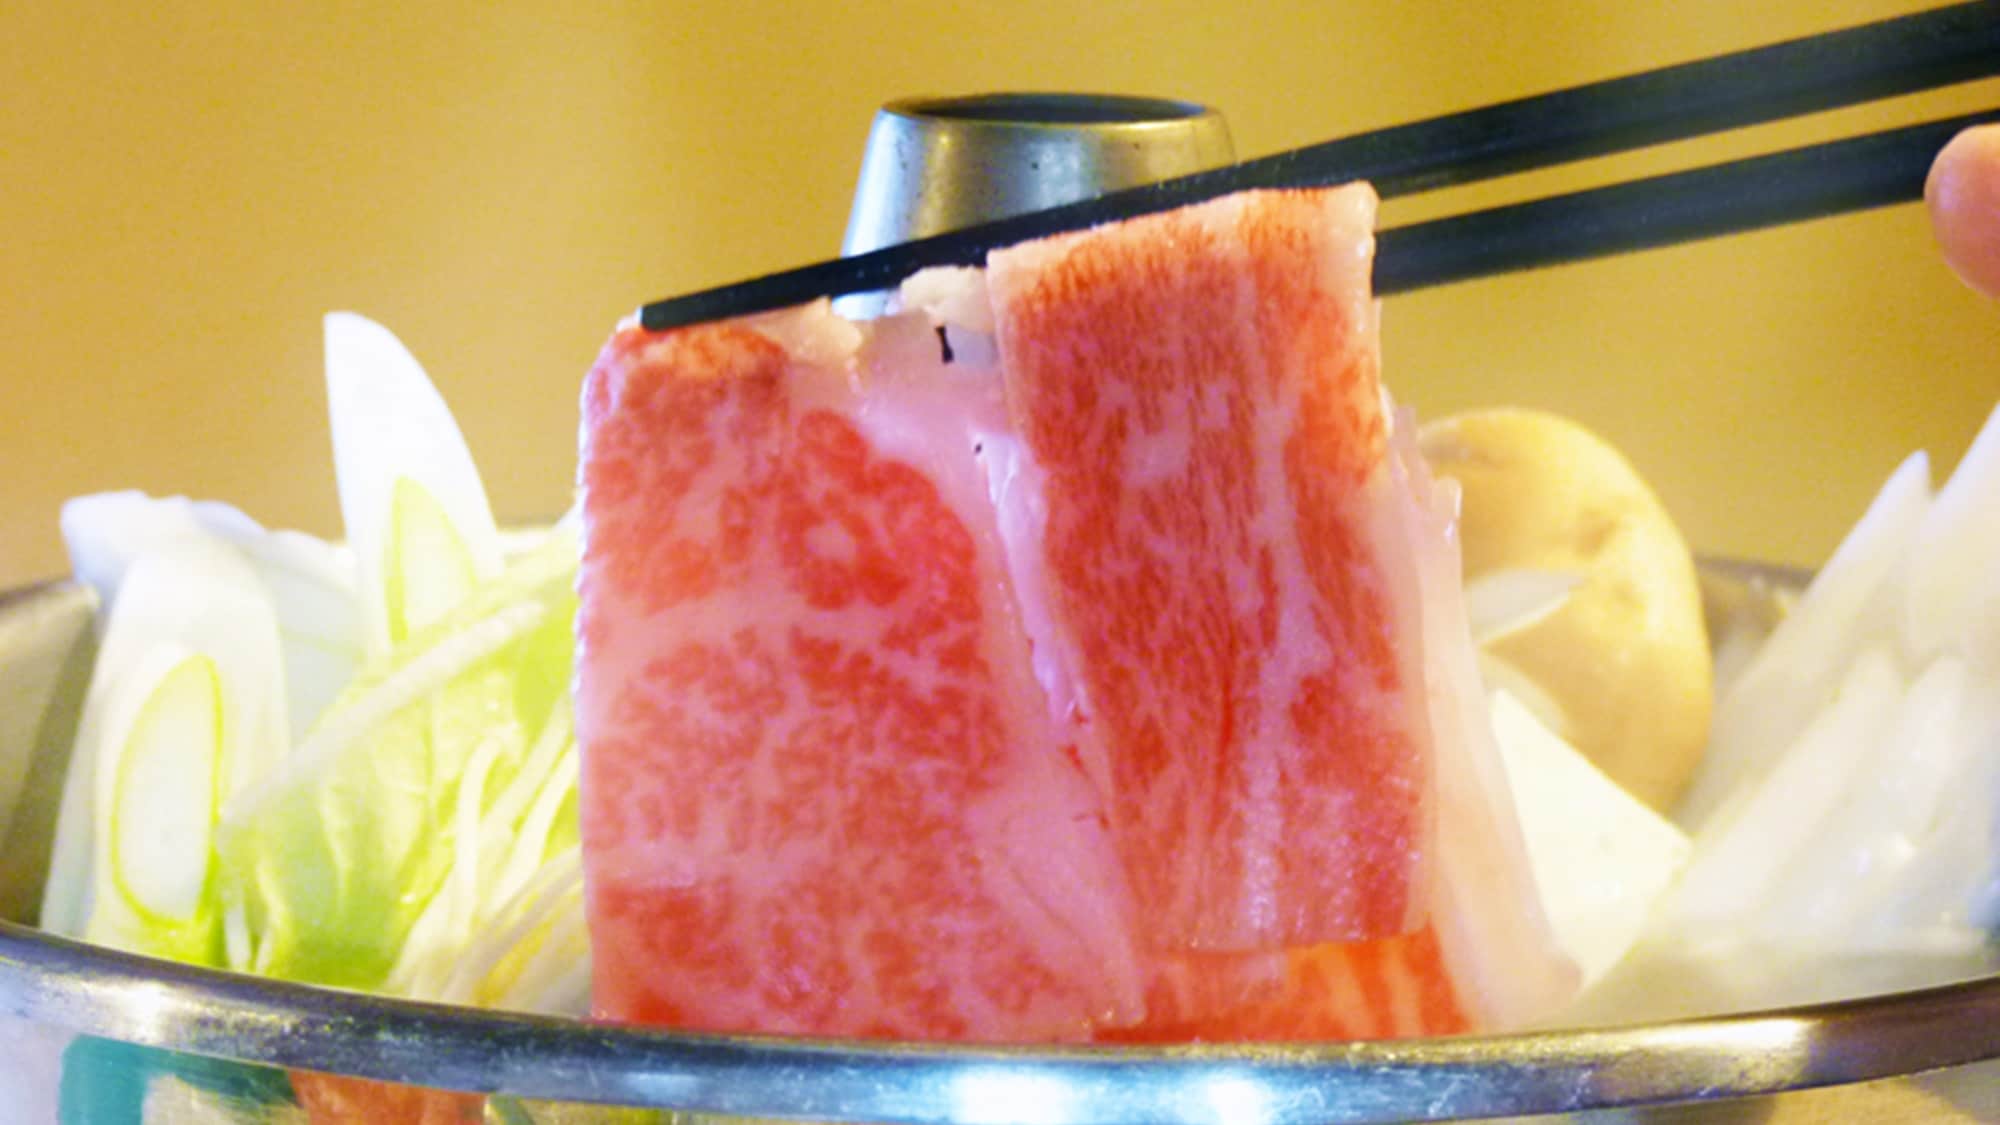 * Supper Yonezawa beef shabu-shabu plan